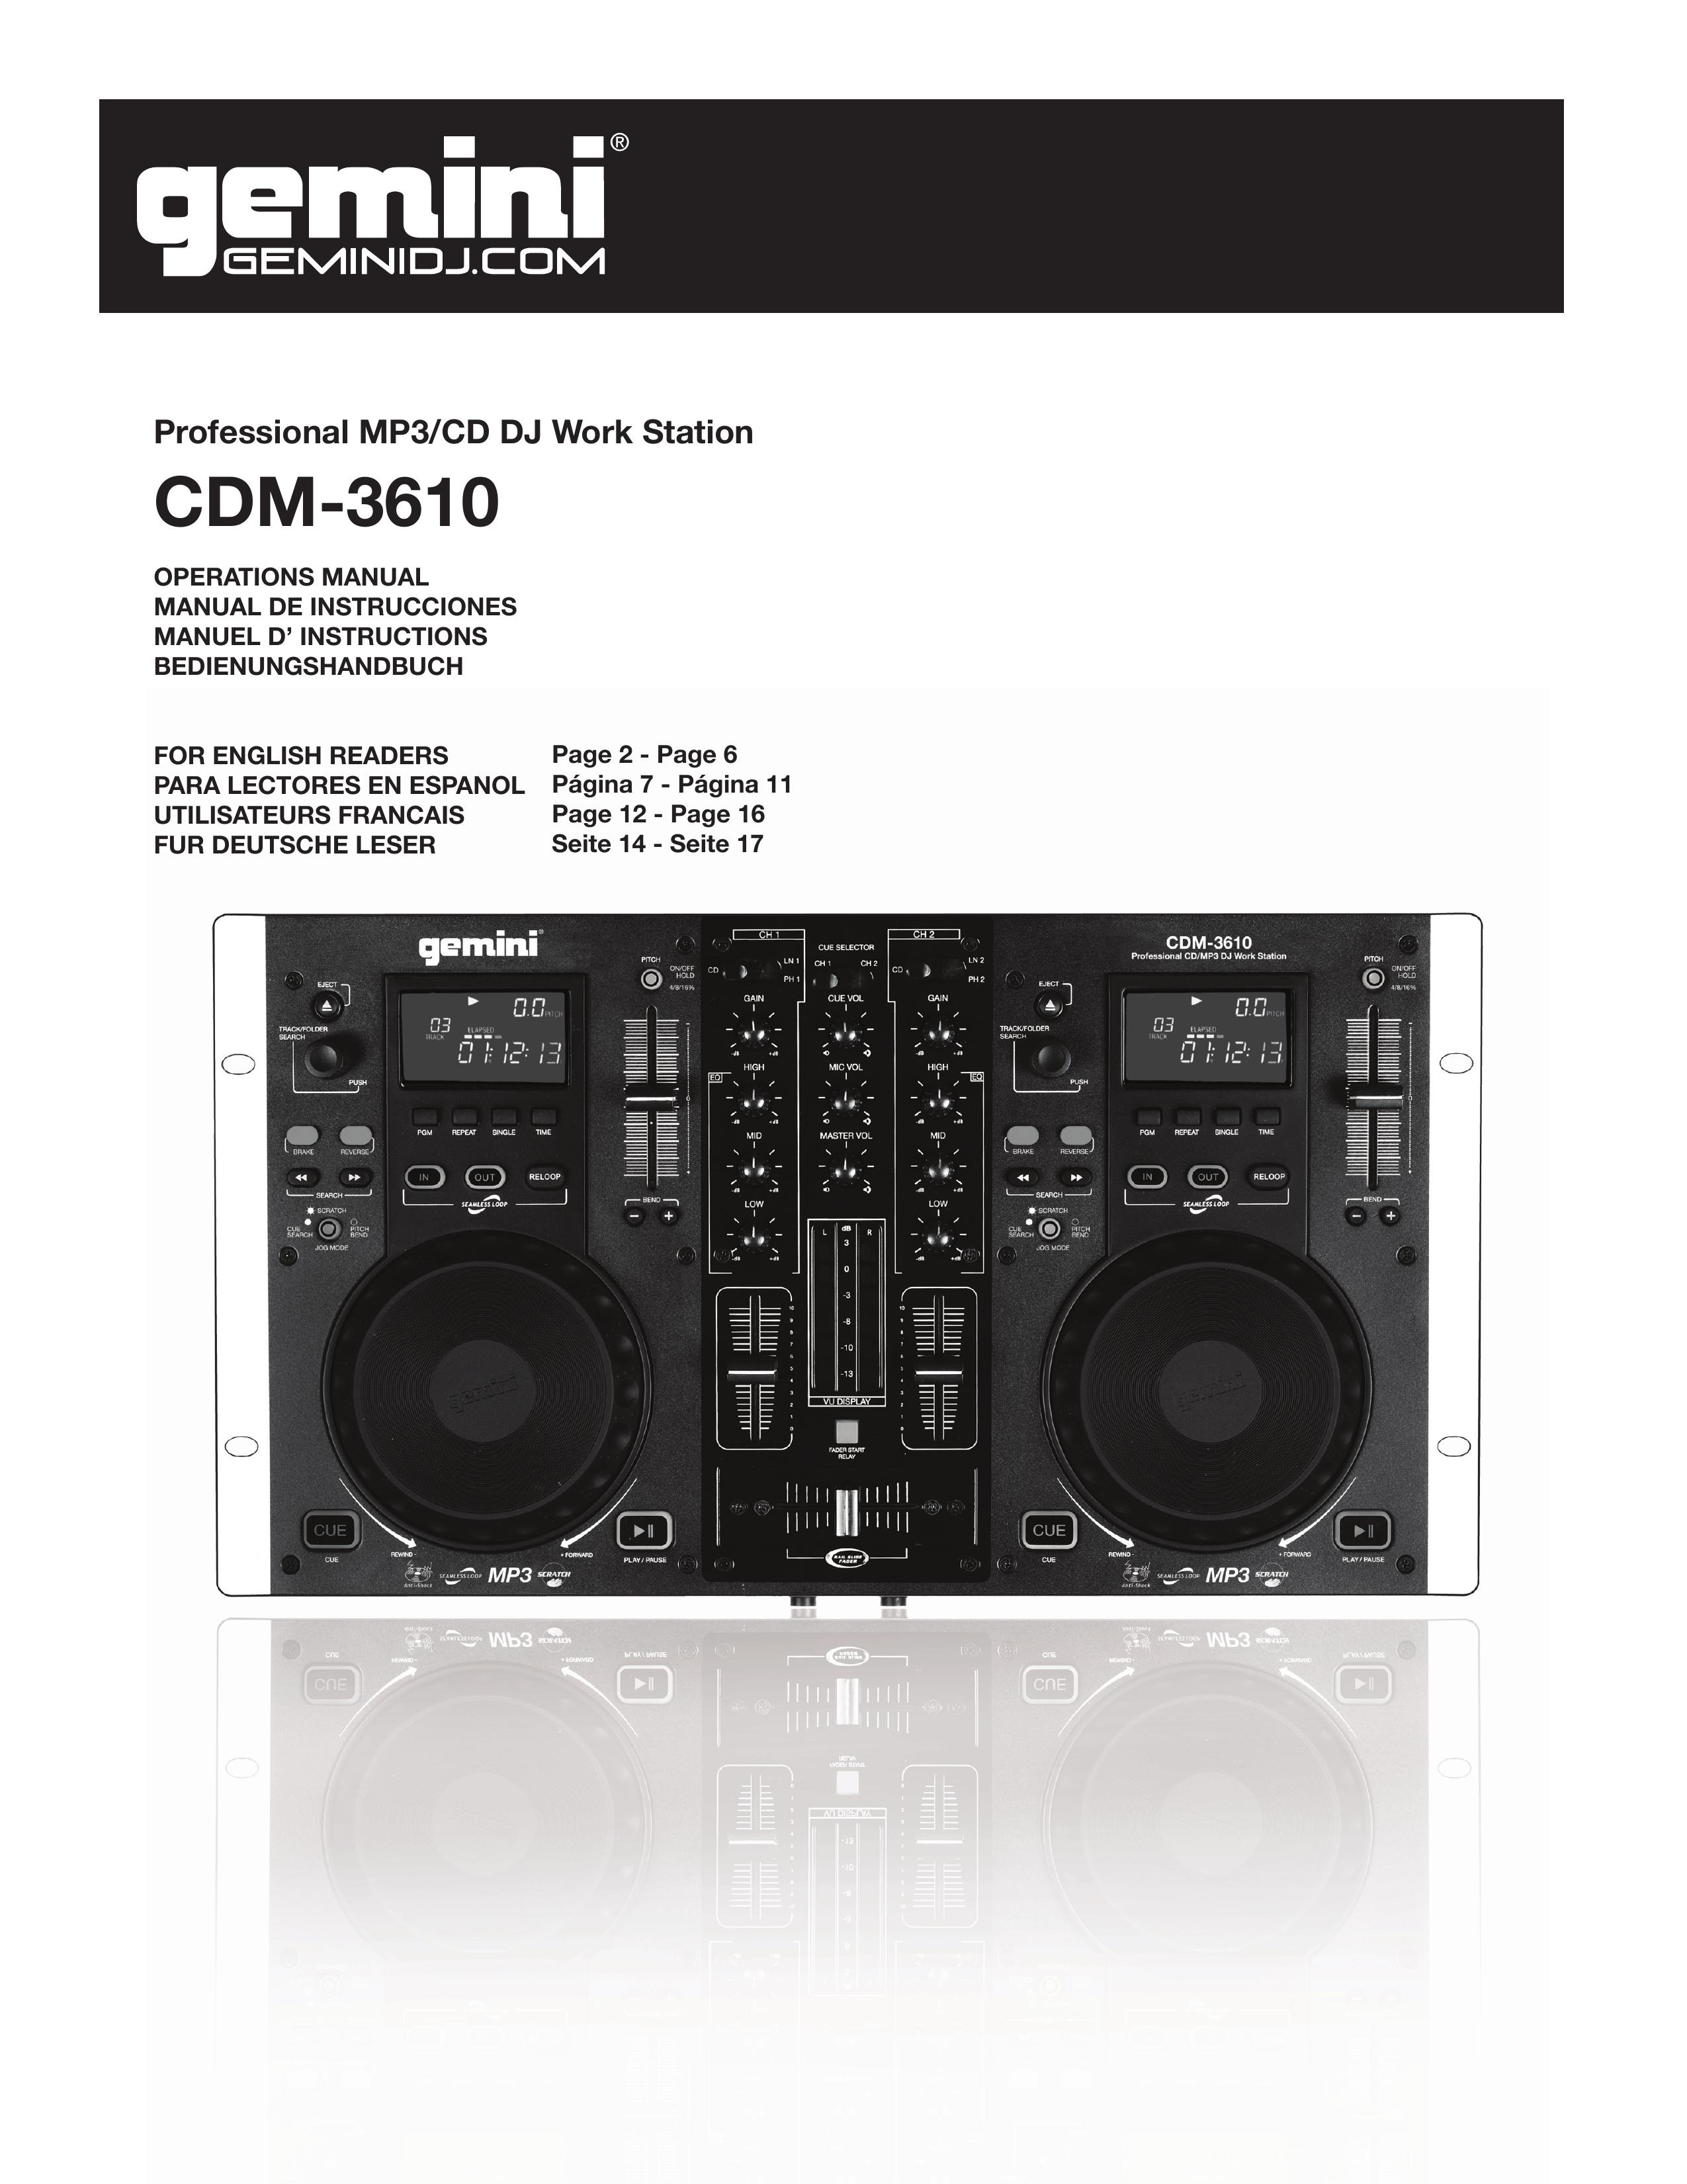 Gemini CDM-3610 DJ Equipment User Manual